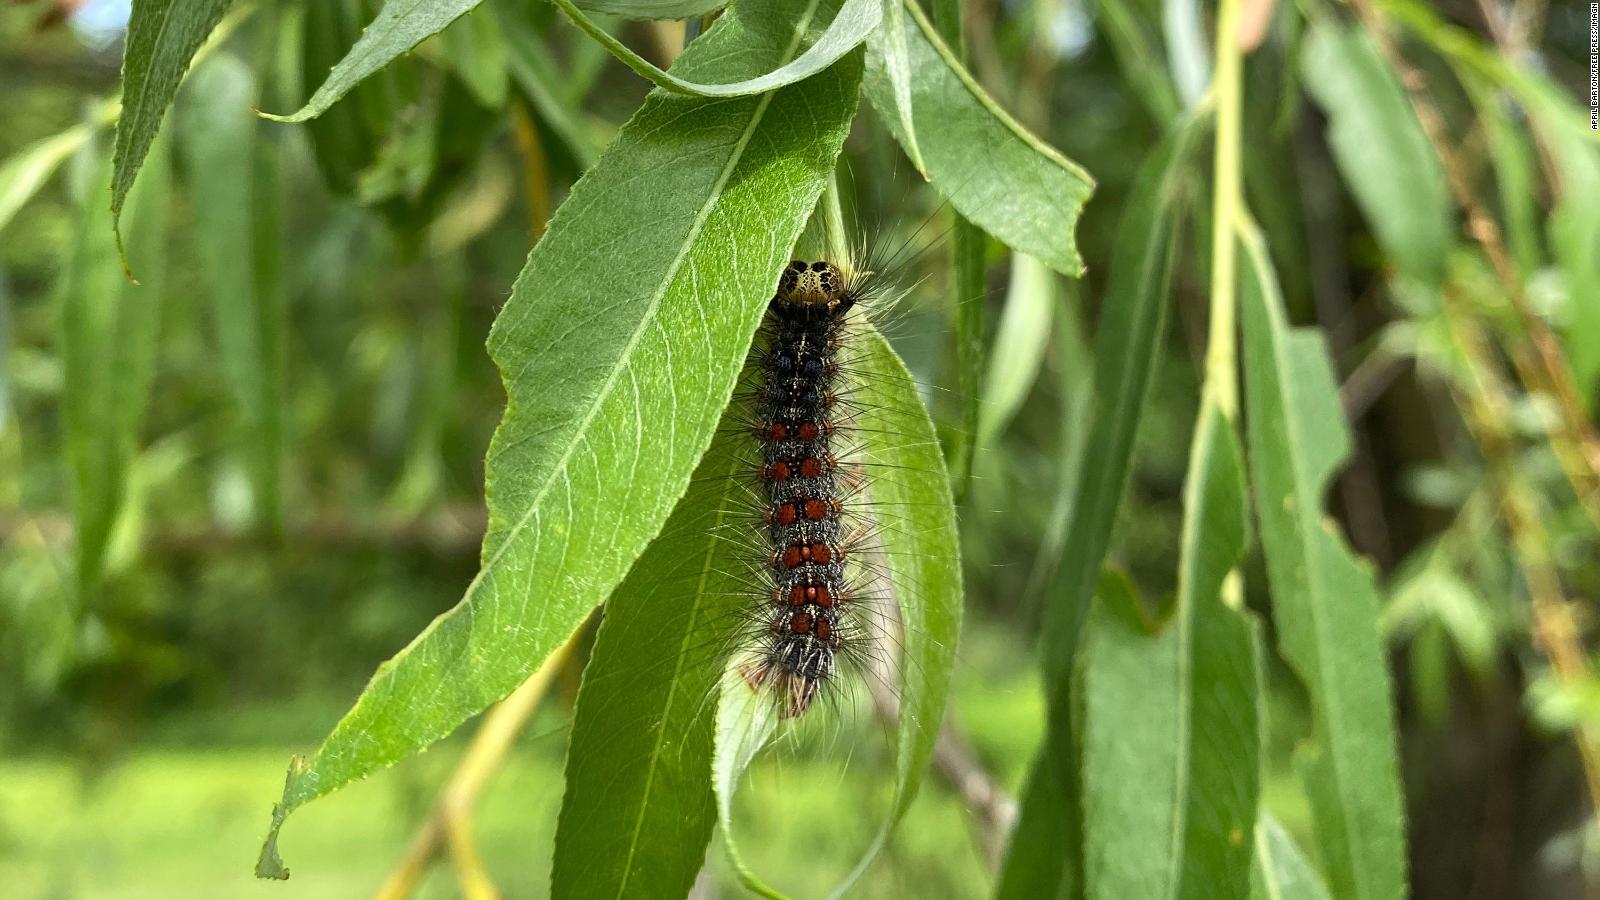 Gypsy moth caterpillars outbreak is 'devastating' in Northeast - CNN